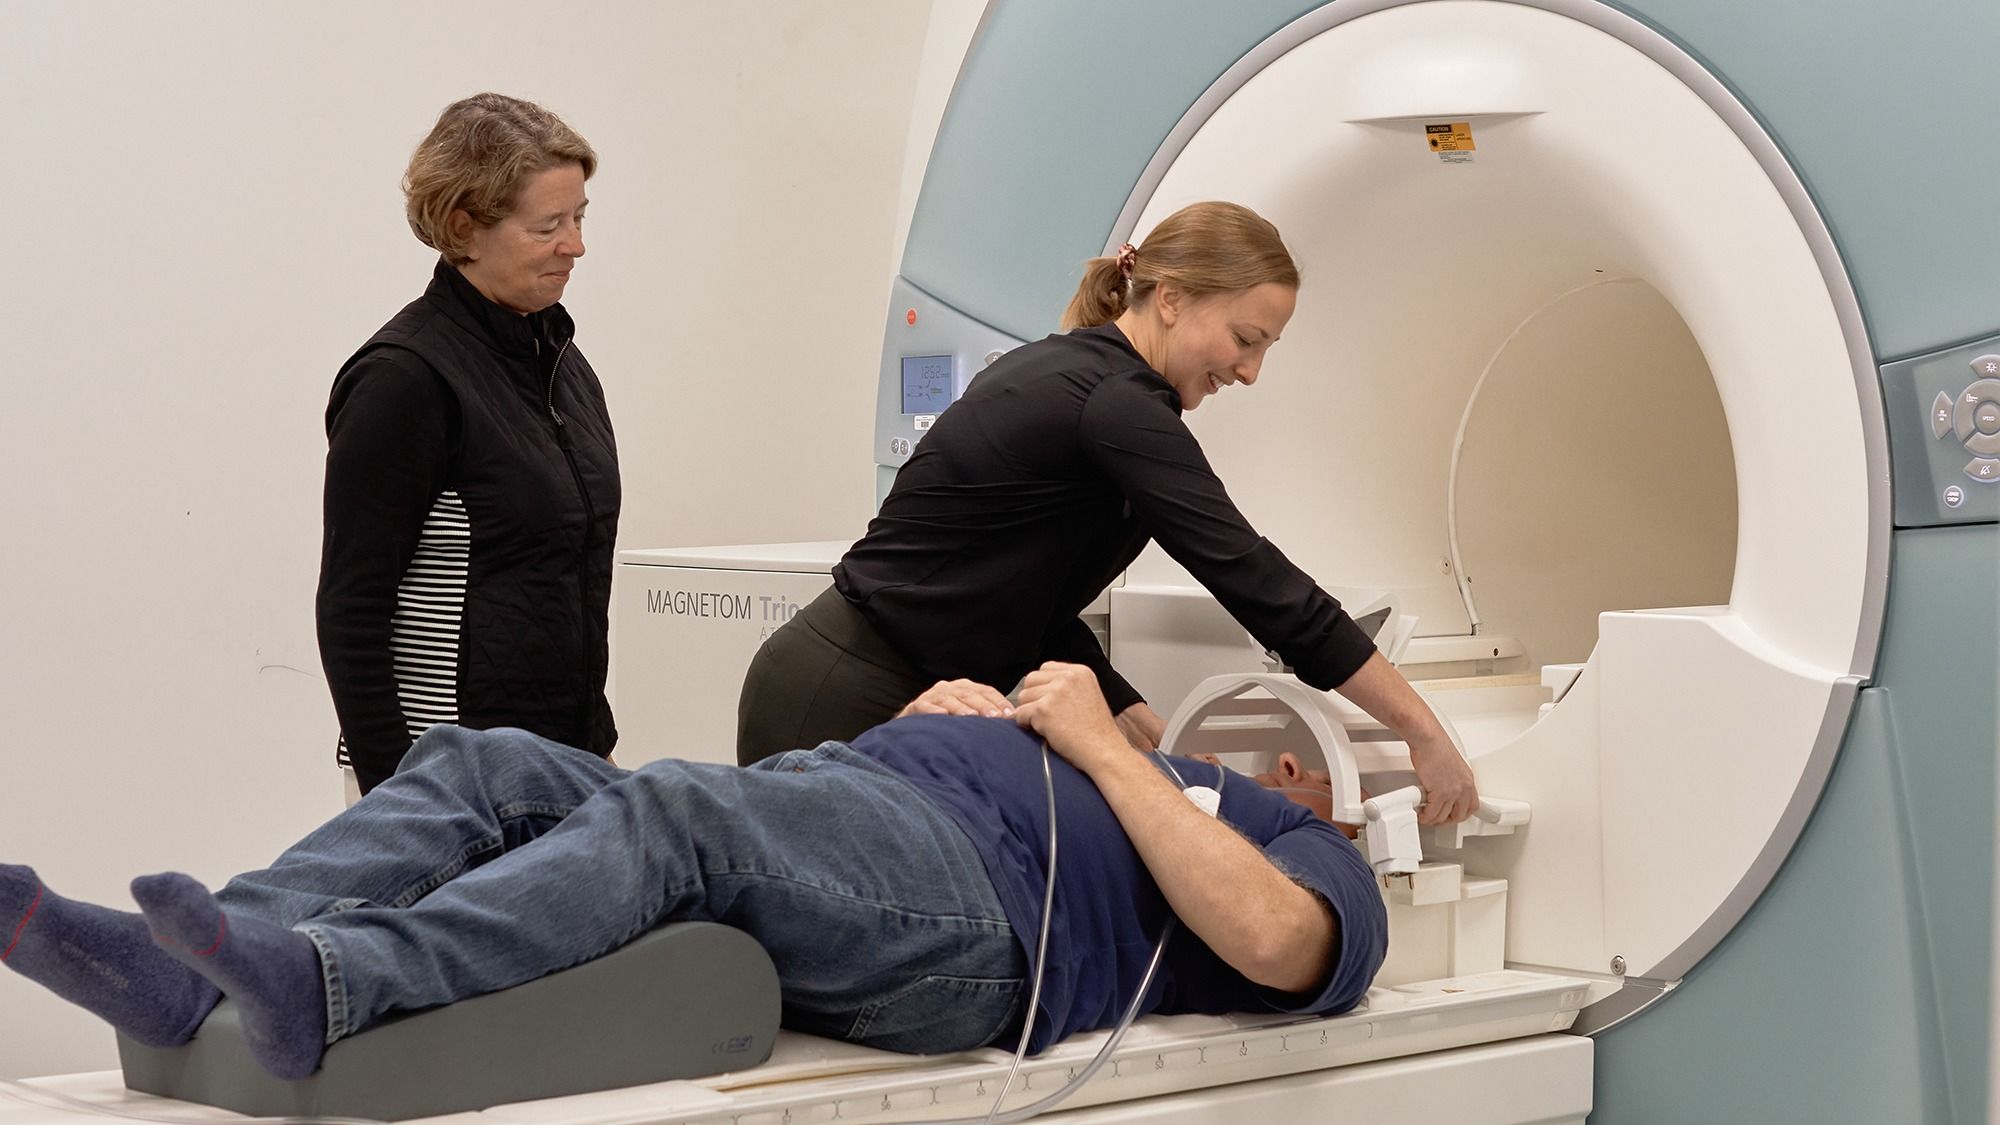 Dr. Etnier and a grad student prepare a participant for an MRI scan.